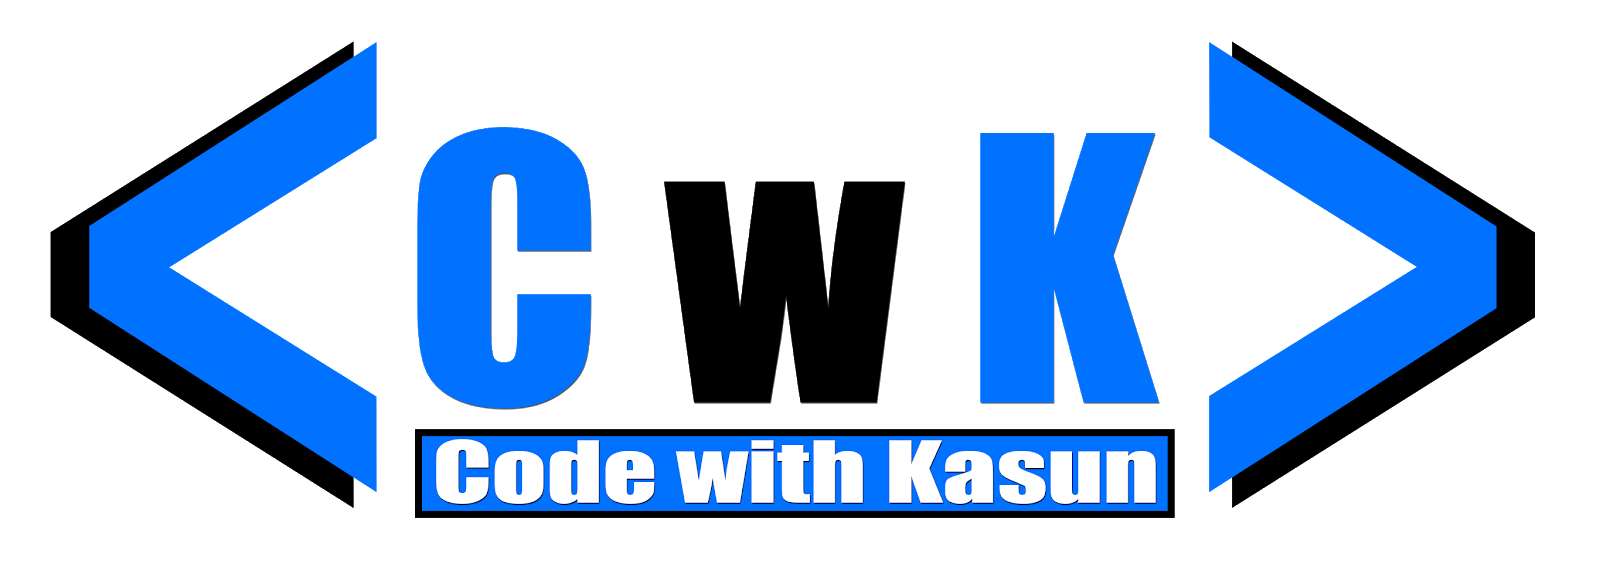 Code with Kasun | CWK